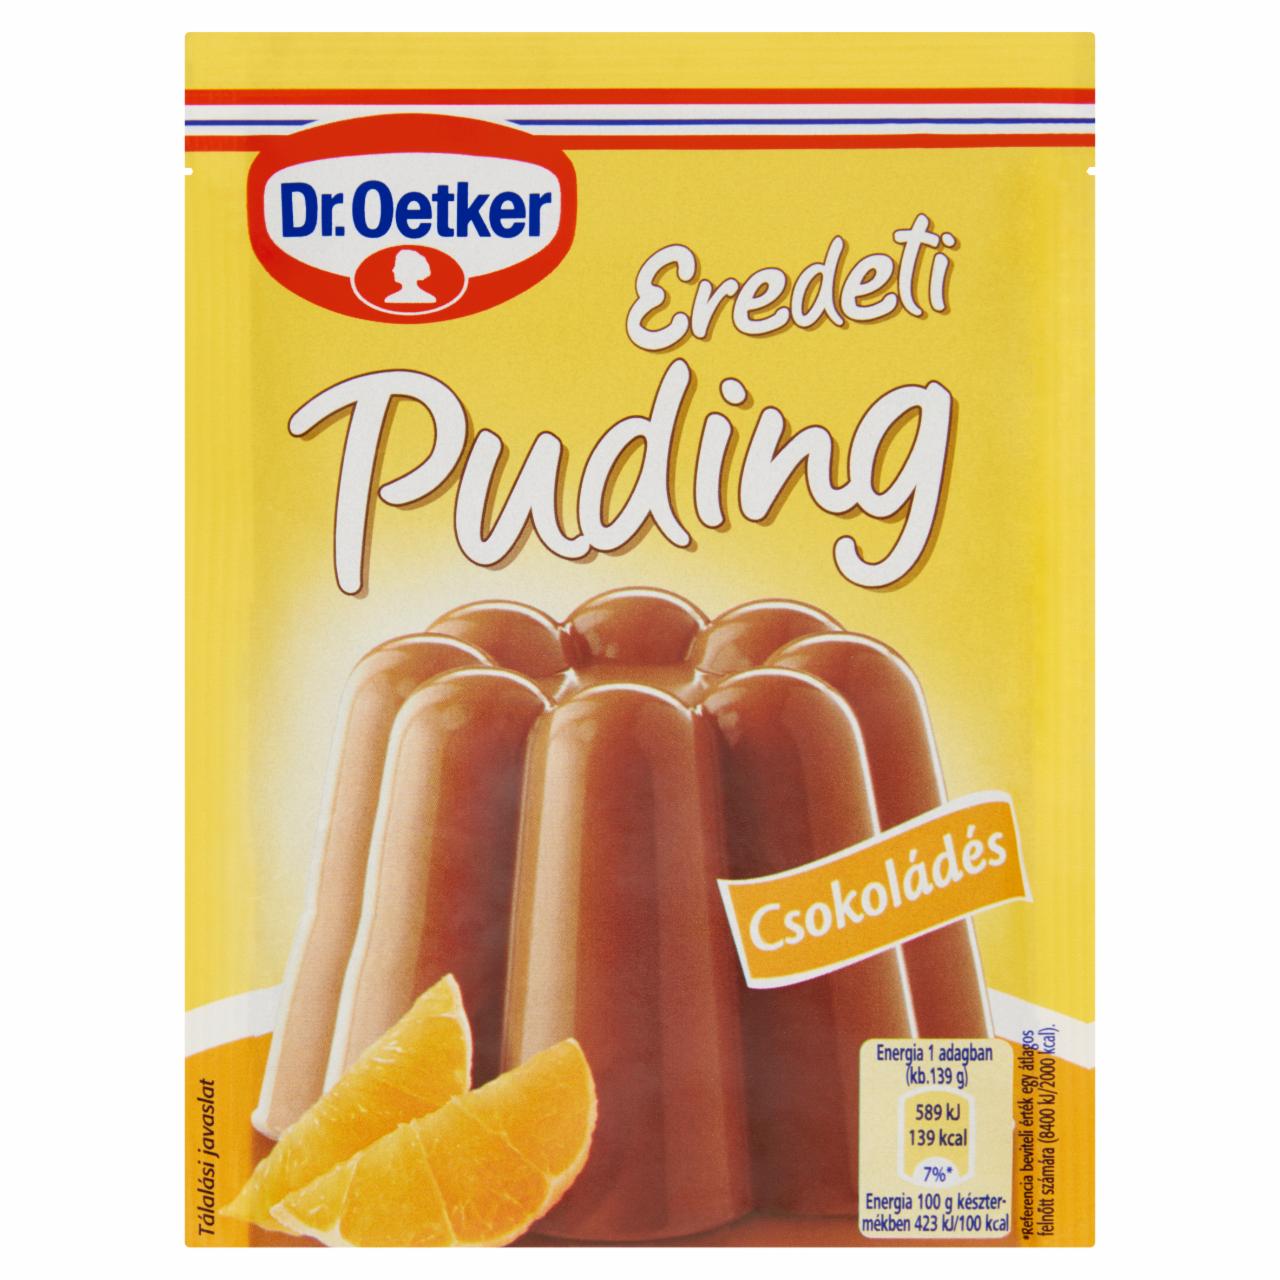 Képek - Dr. Oetker Eredeti Puding csokoládés pudingpor 49 g